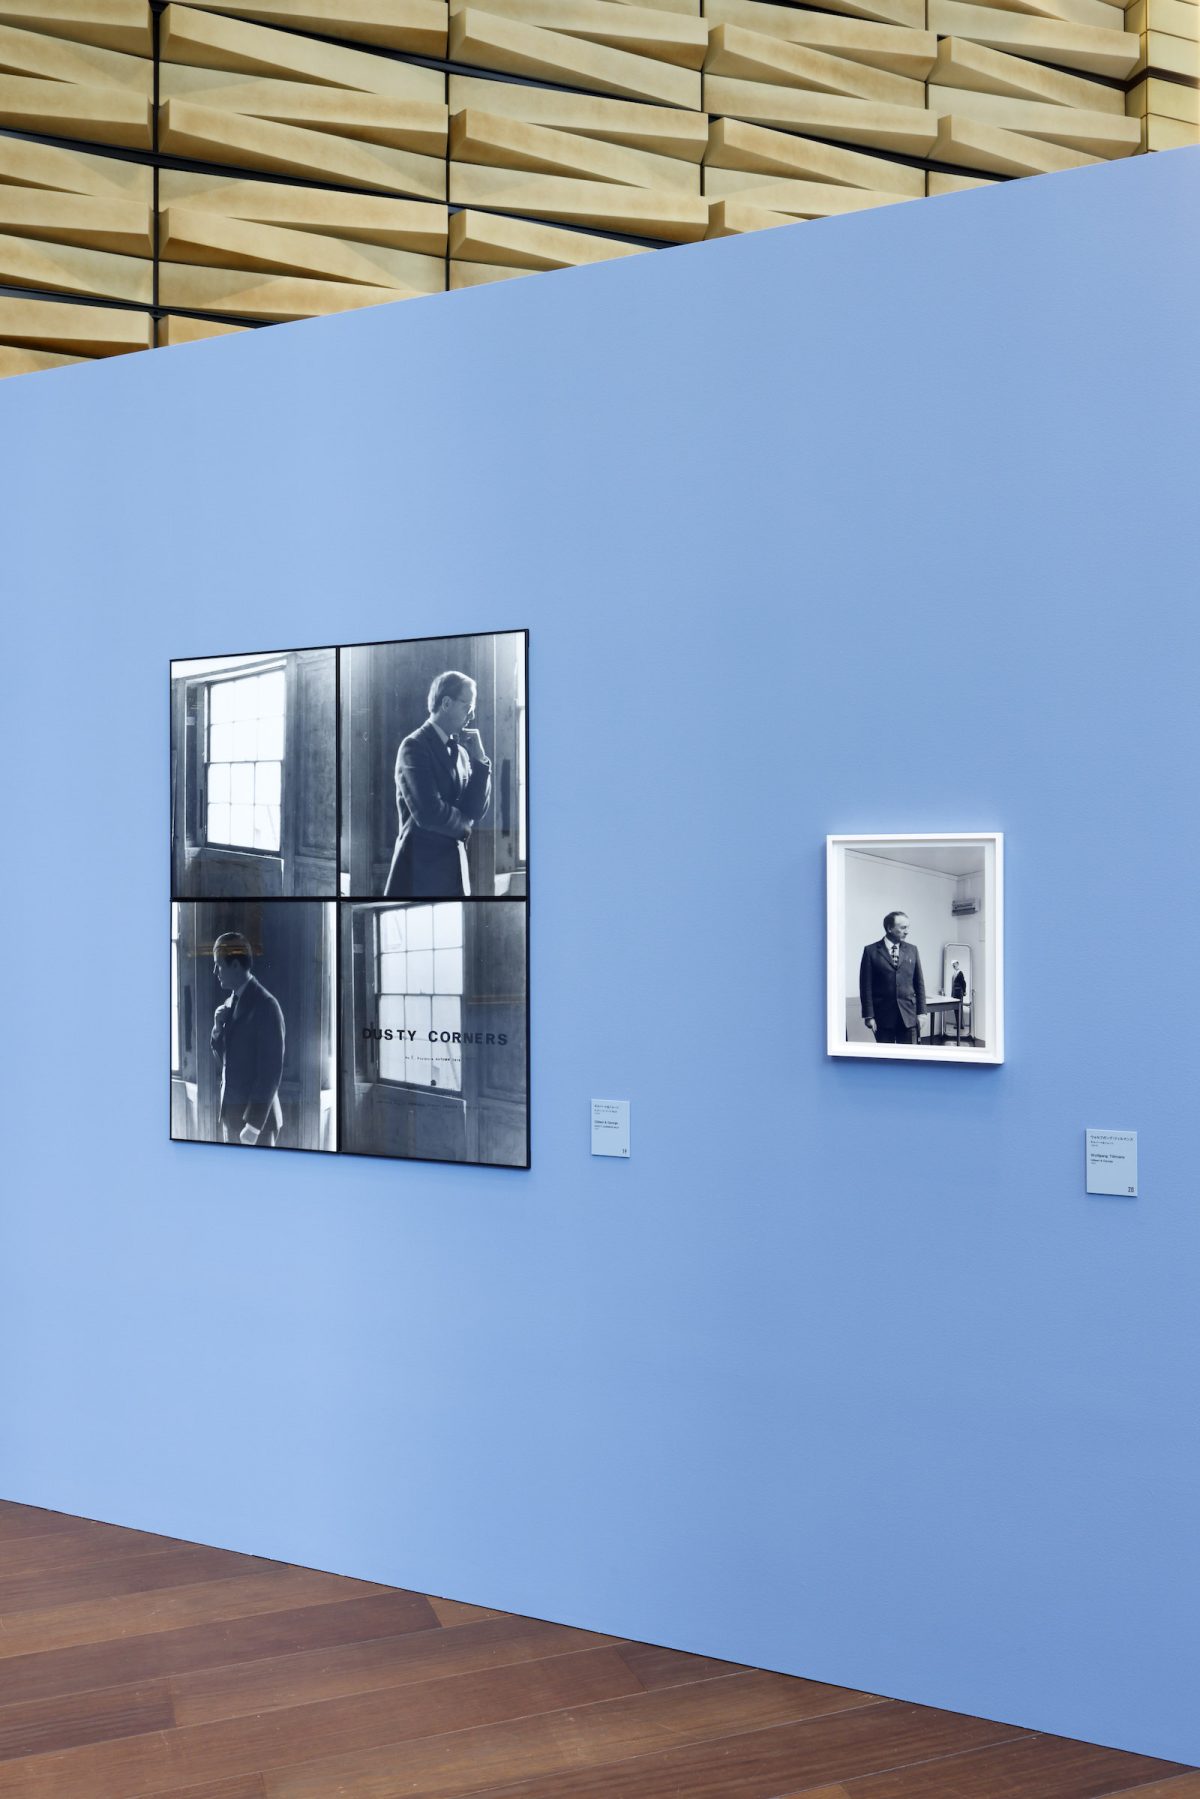 「Portraits｜OBAYASHI COLLECTION 多様化する人間像とアート 近代から現代まで」展示風景より。左：ギルバート＆ジョージ《ダスティ・コーナーズNo.8》1975年、右：ウォルフガング・ティルマンス《ギルバート＆ジョージ》1997年